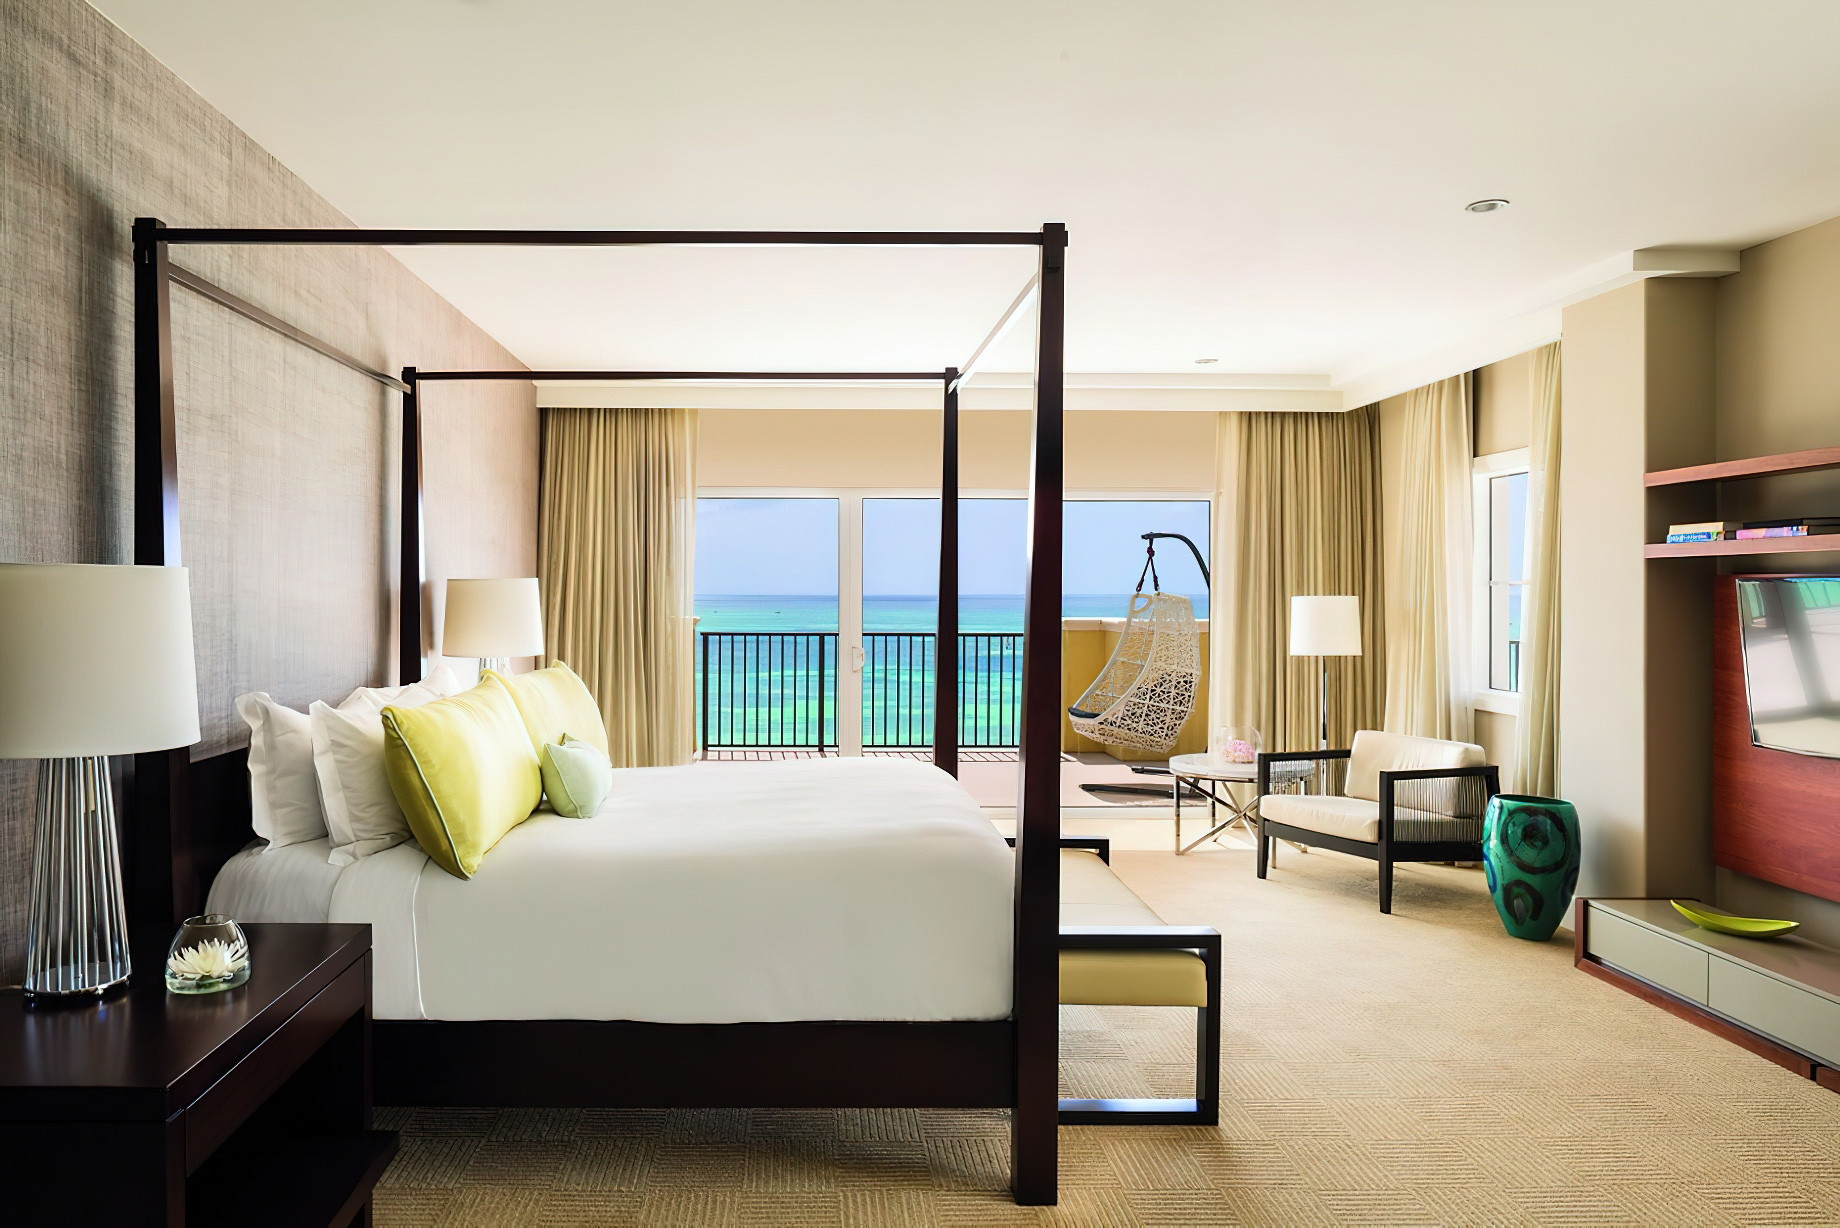 The Ritz-Carlton, Aruba Resort – Palm Beach, Aruba – Ritz-Carlton Suite Bedroom